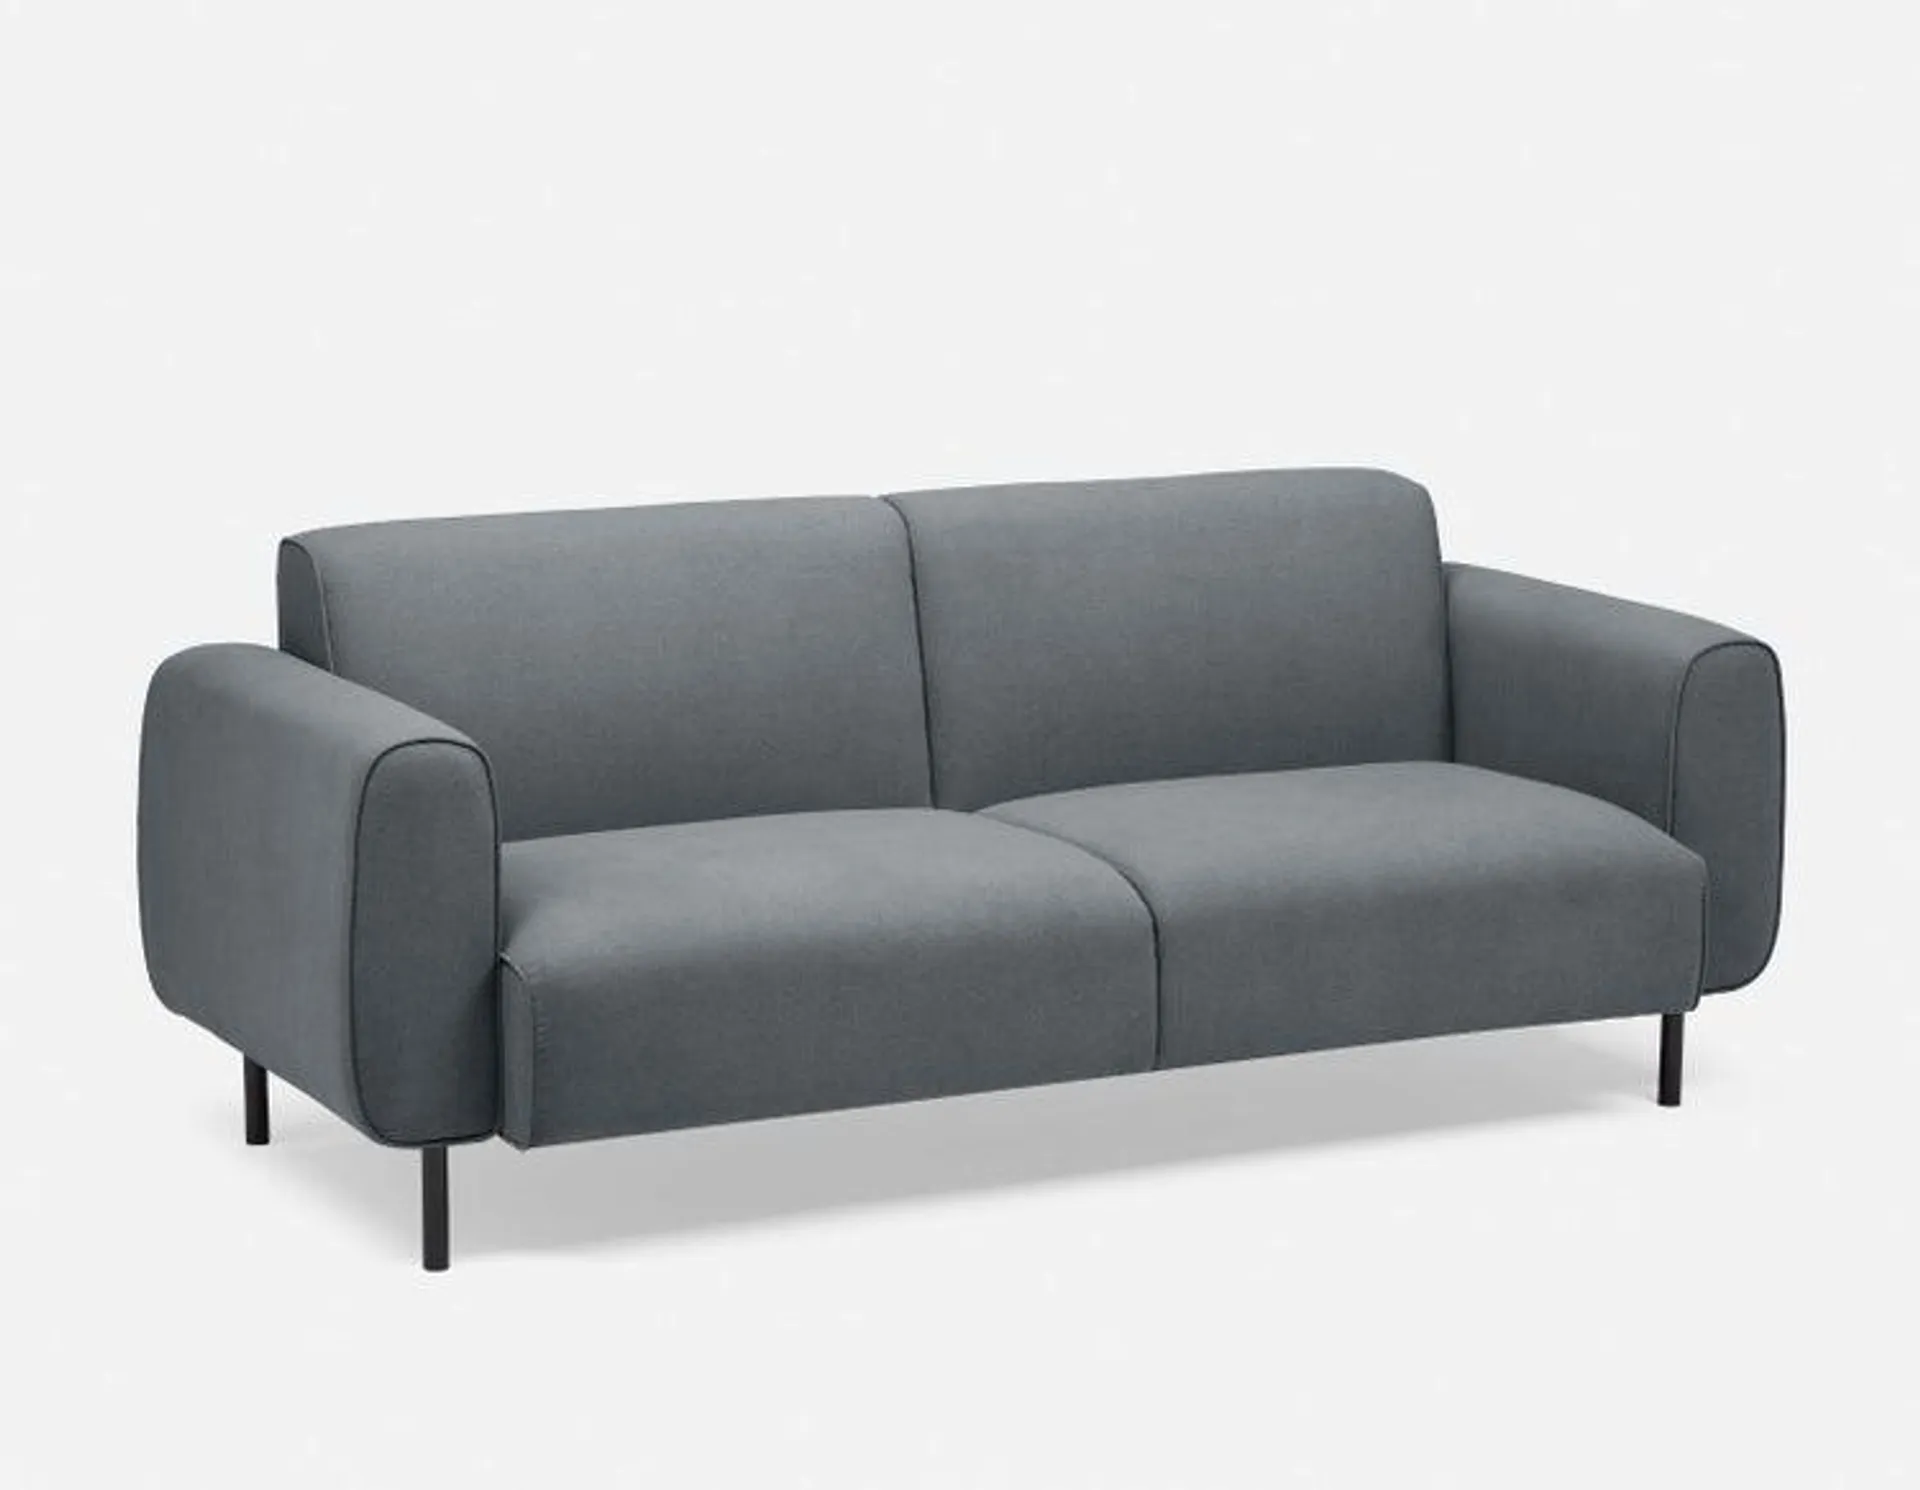 KLIK 3-seater sofa